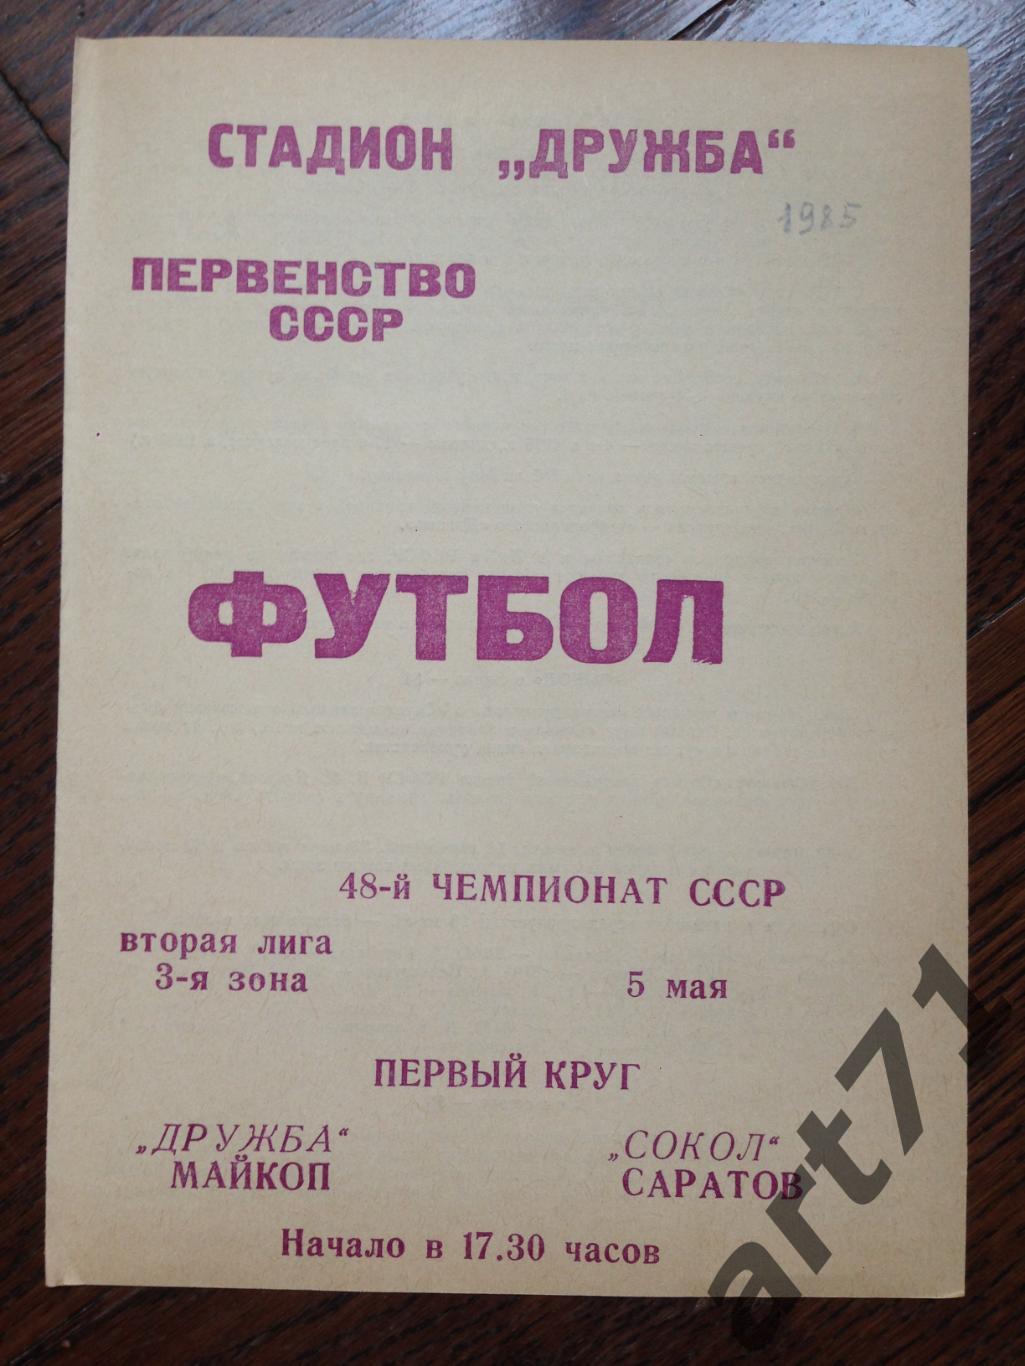 Дружба Майкоп - Сокол Саратов 1985